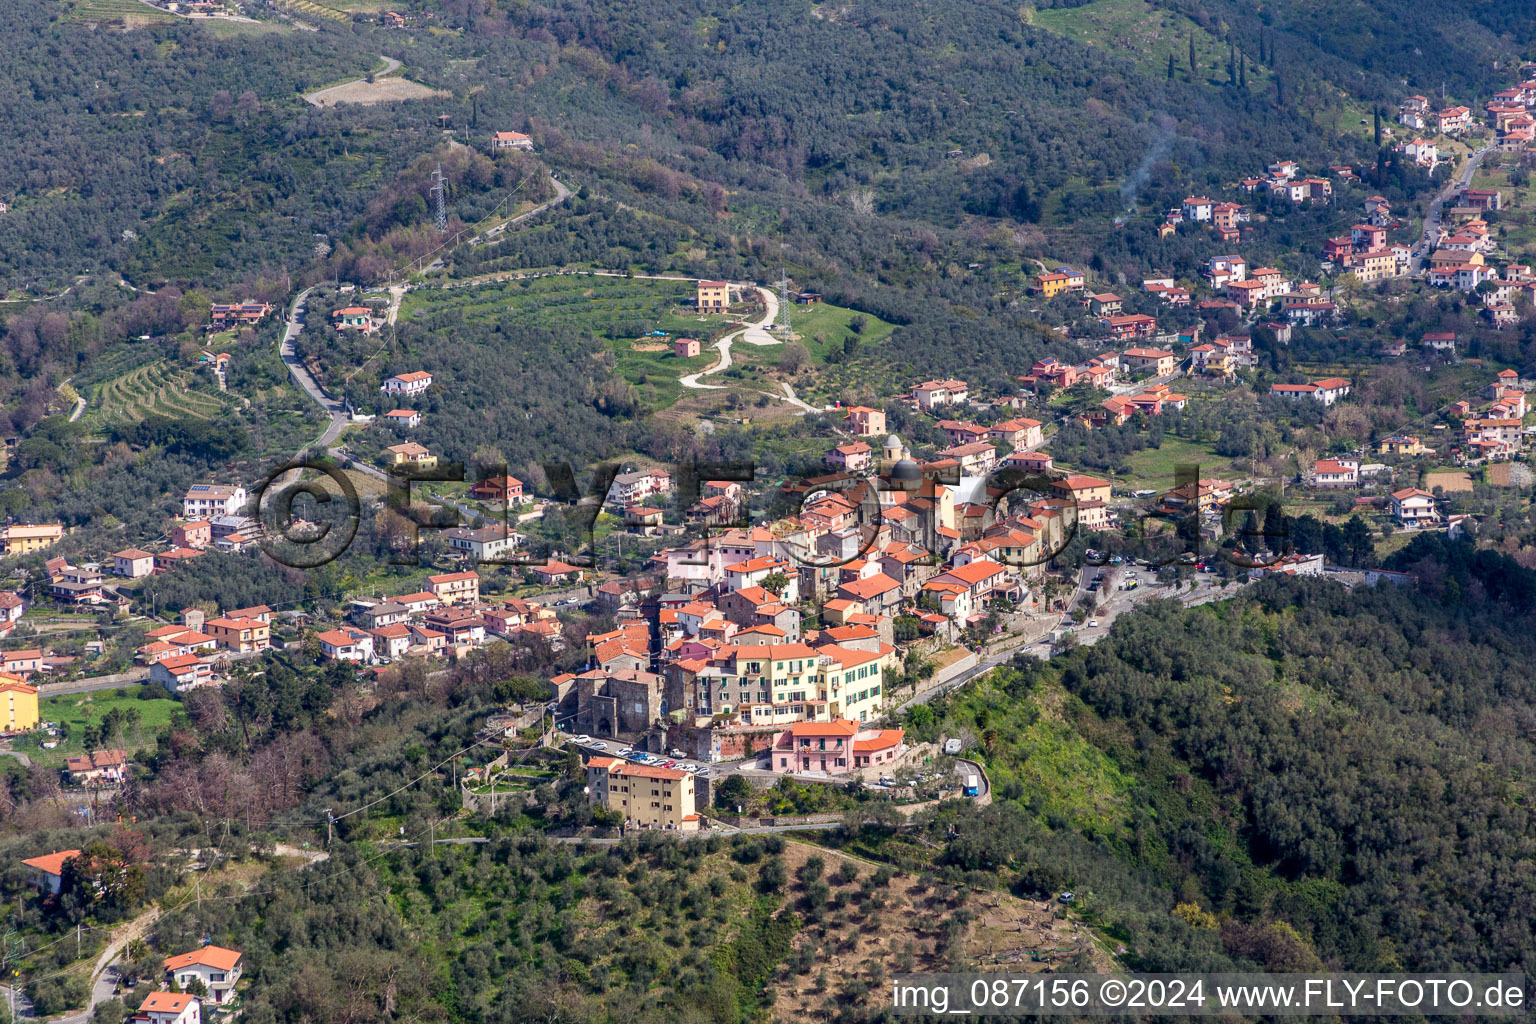 Village view in Nicola in Ligurien, Italy